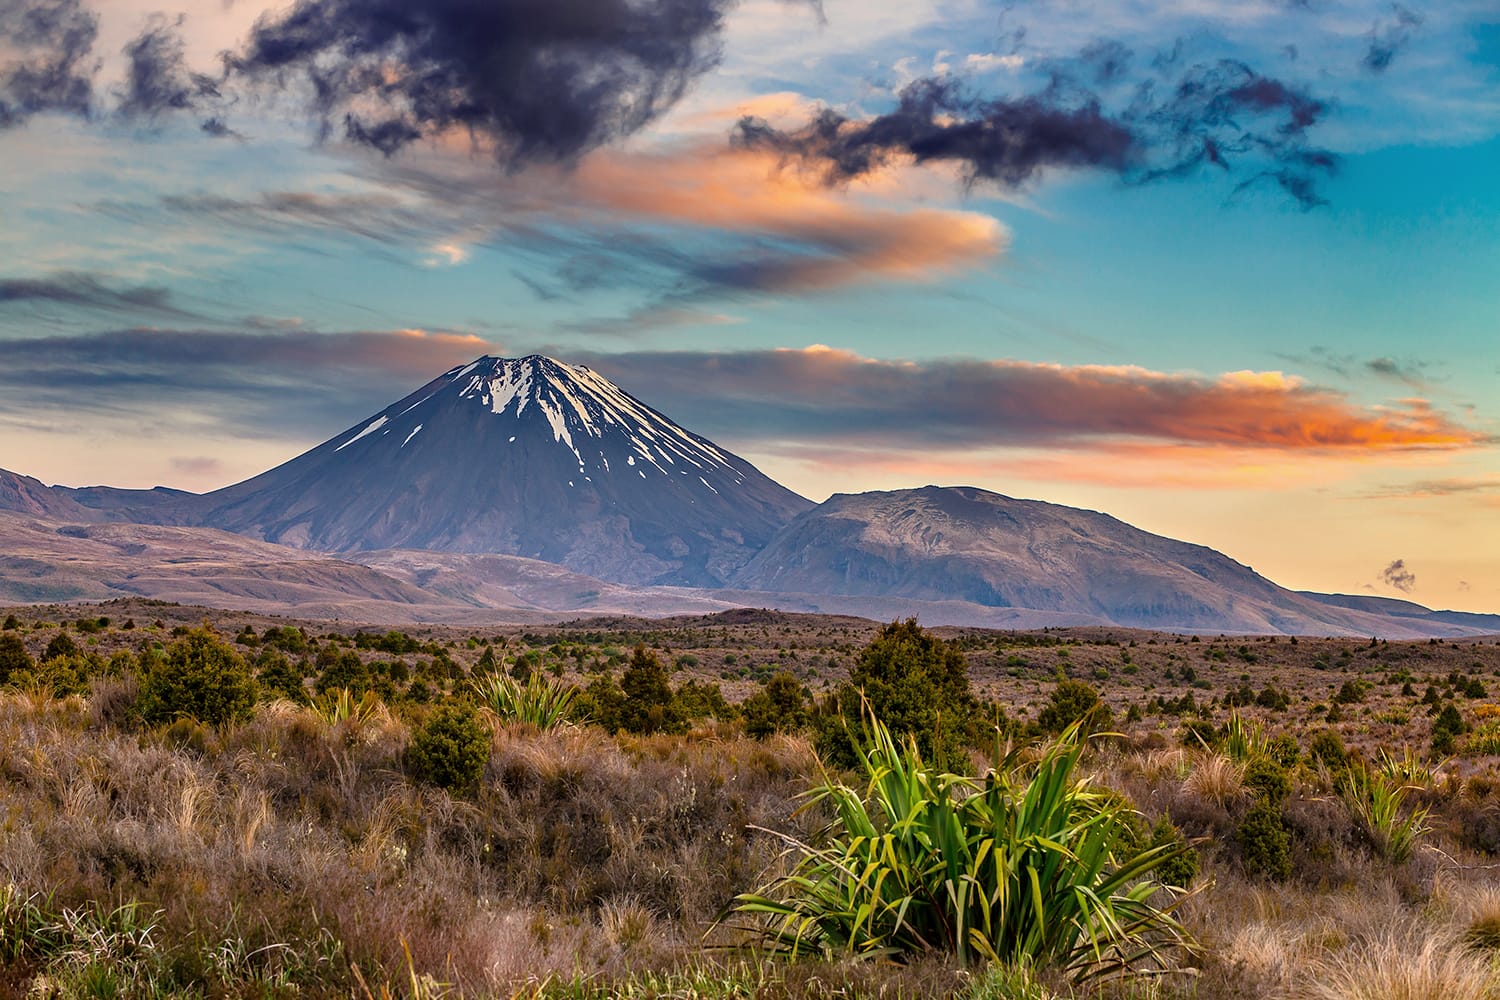 Mt Ngauruhoe (active volcano) in Tongariro National Park, New Zealand